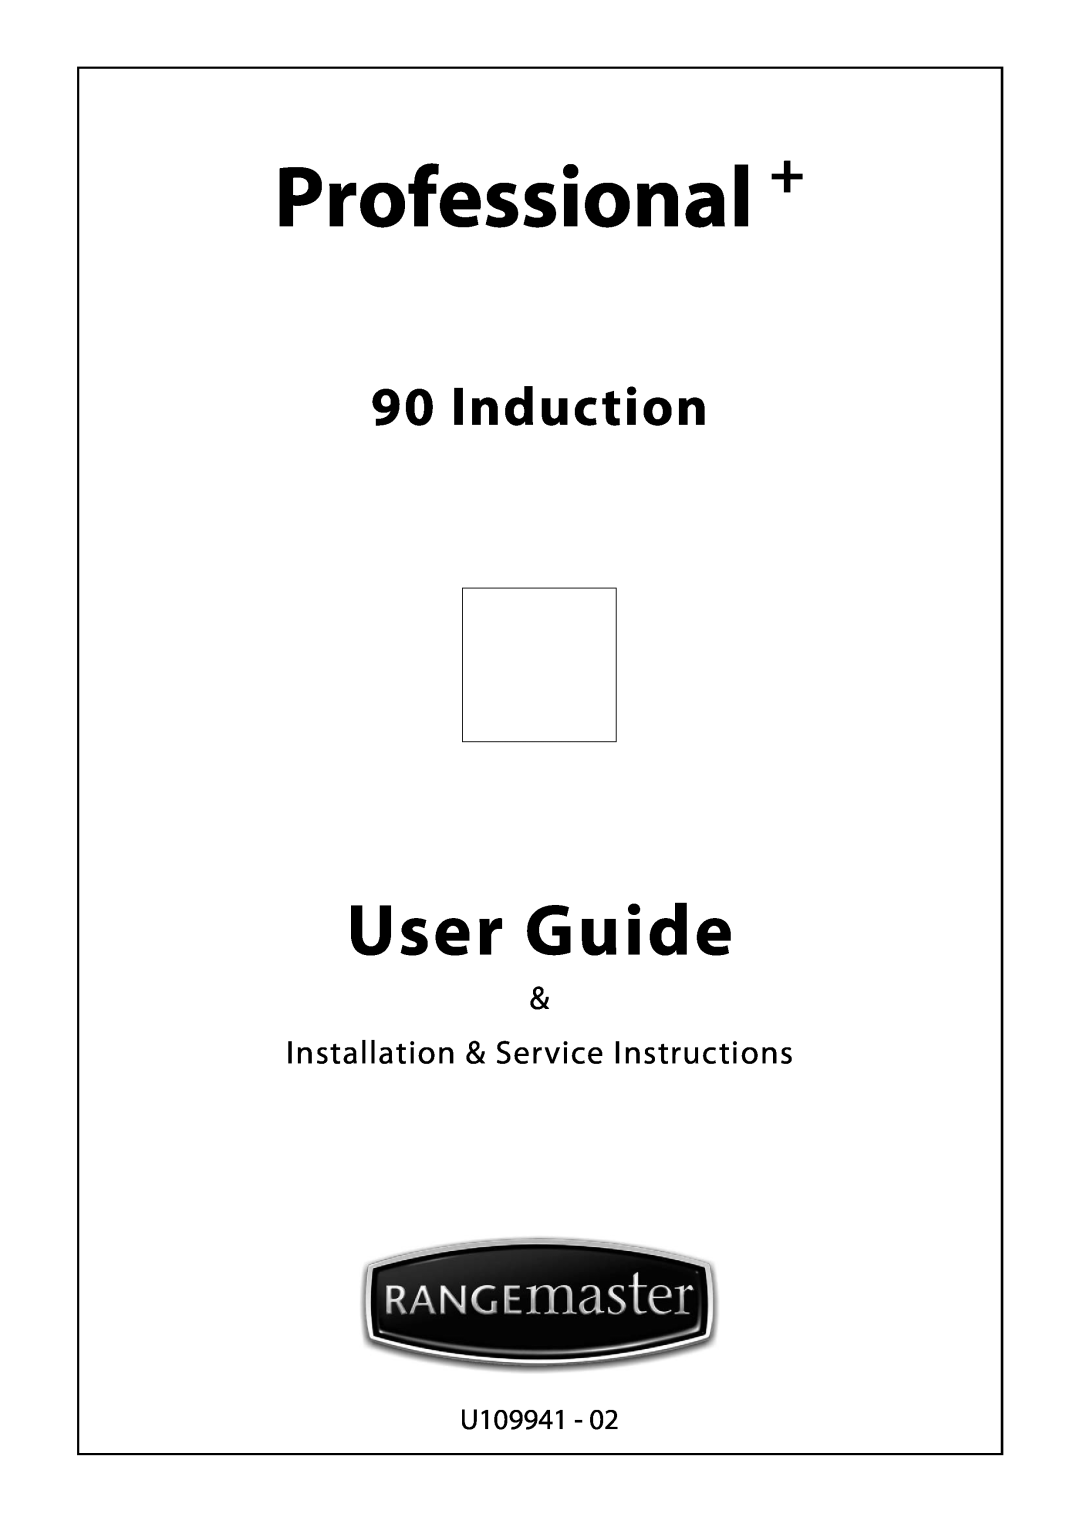 Rangemaster U109941 - 02 manual Professional +, User Guide, Induction, Installation & Service Instructions 